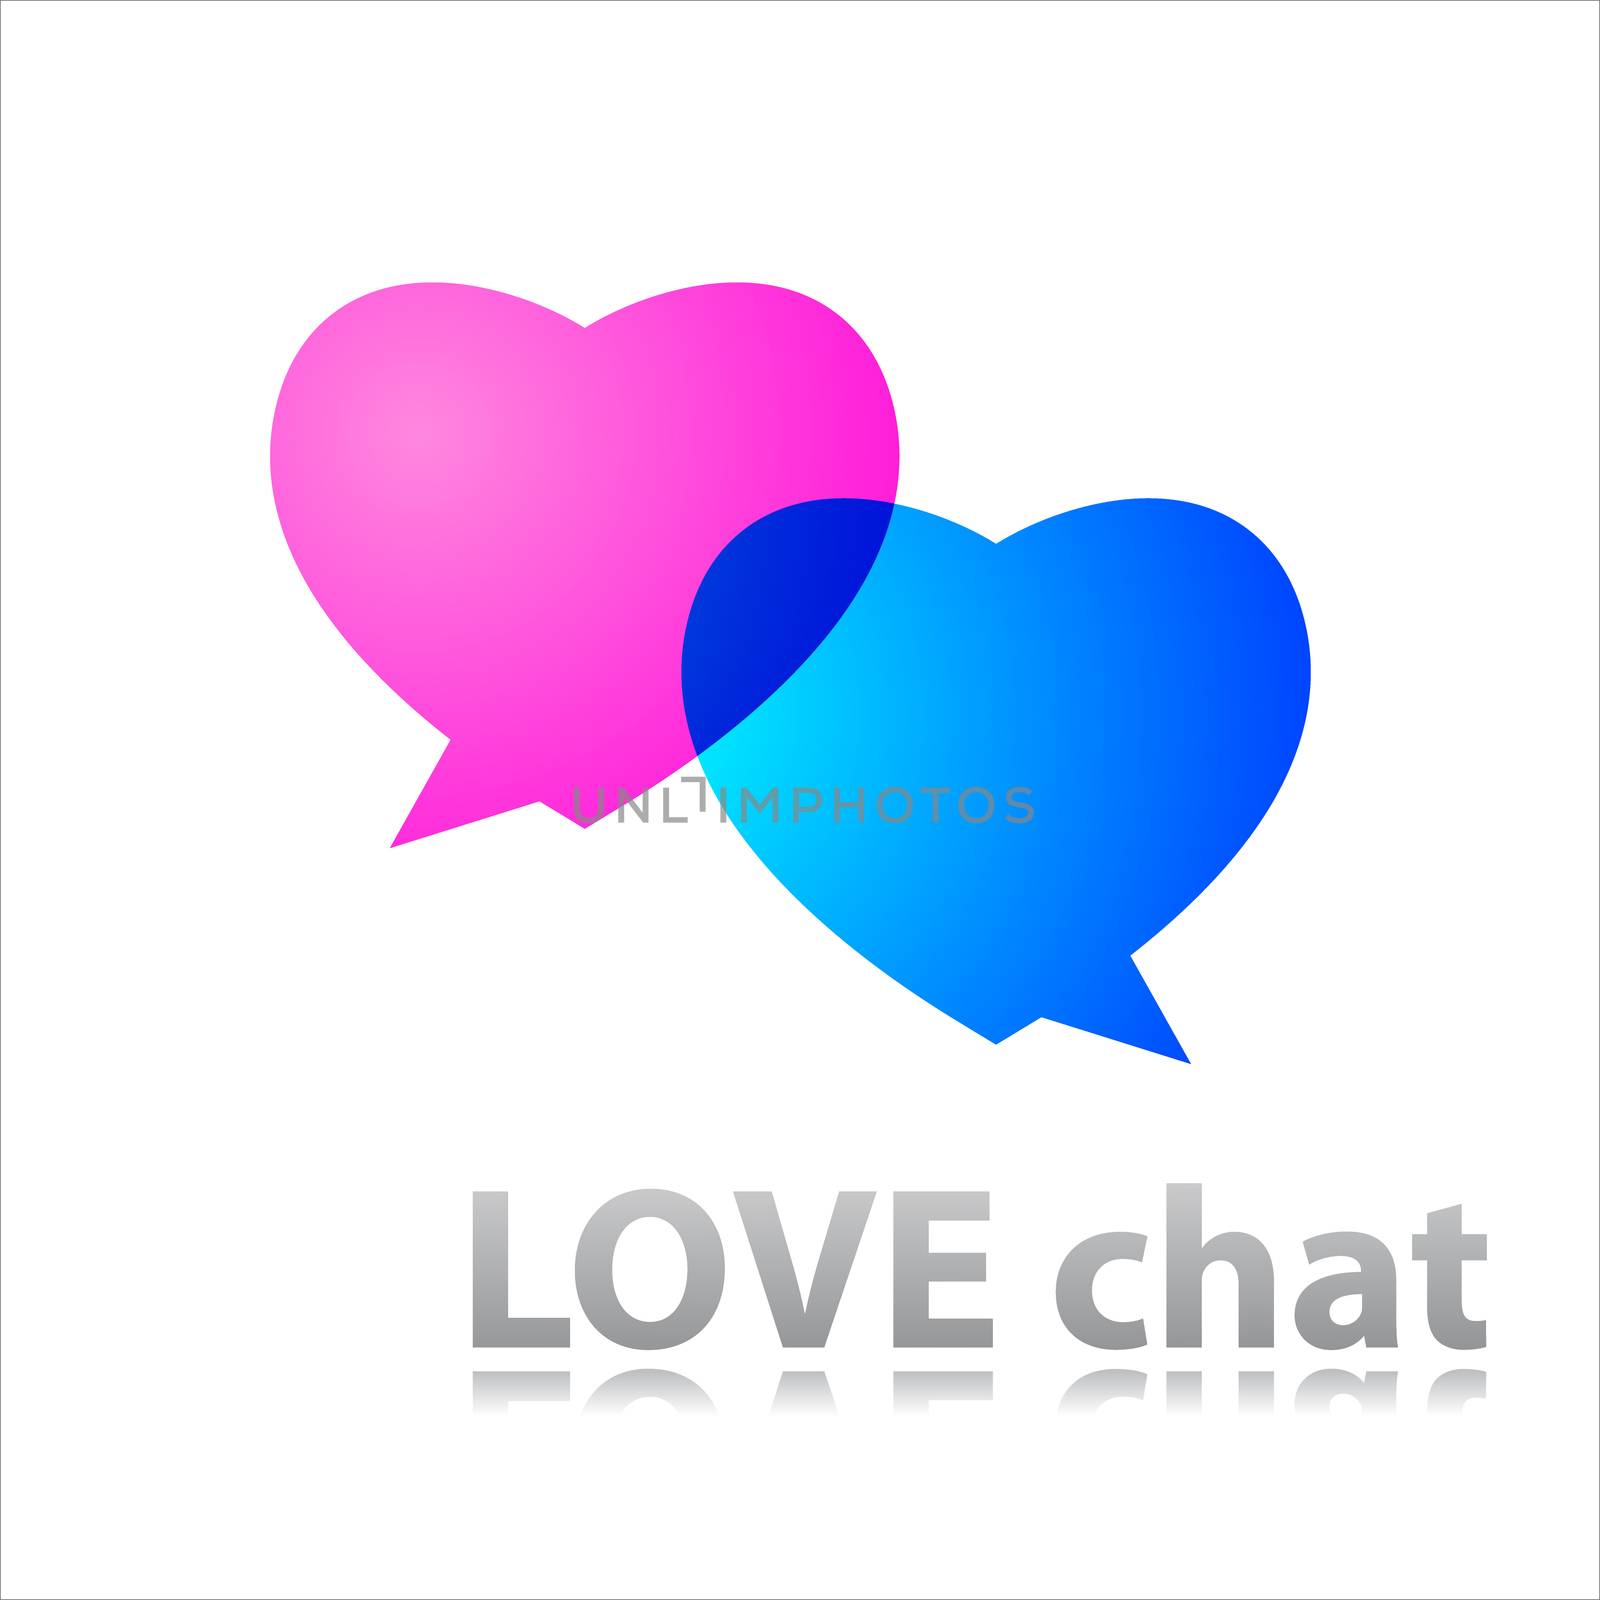 love-chat by antoshkaforever